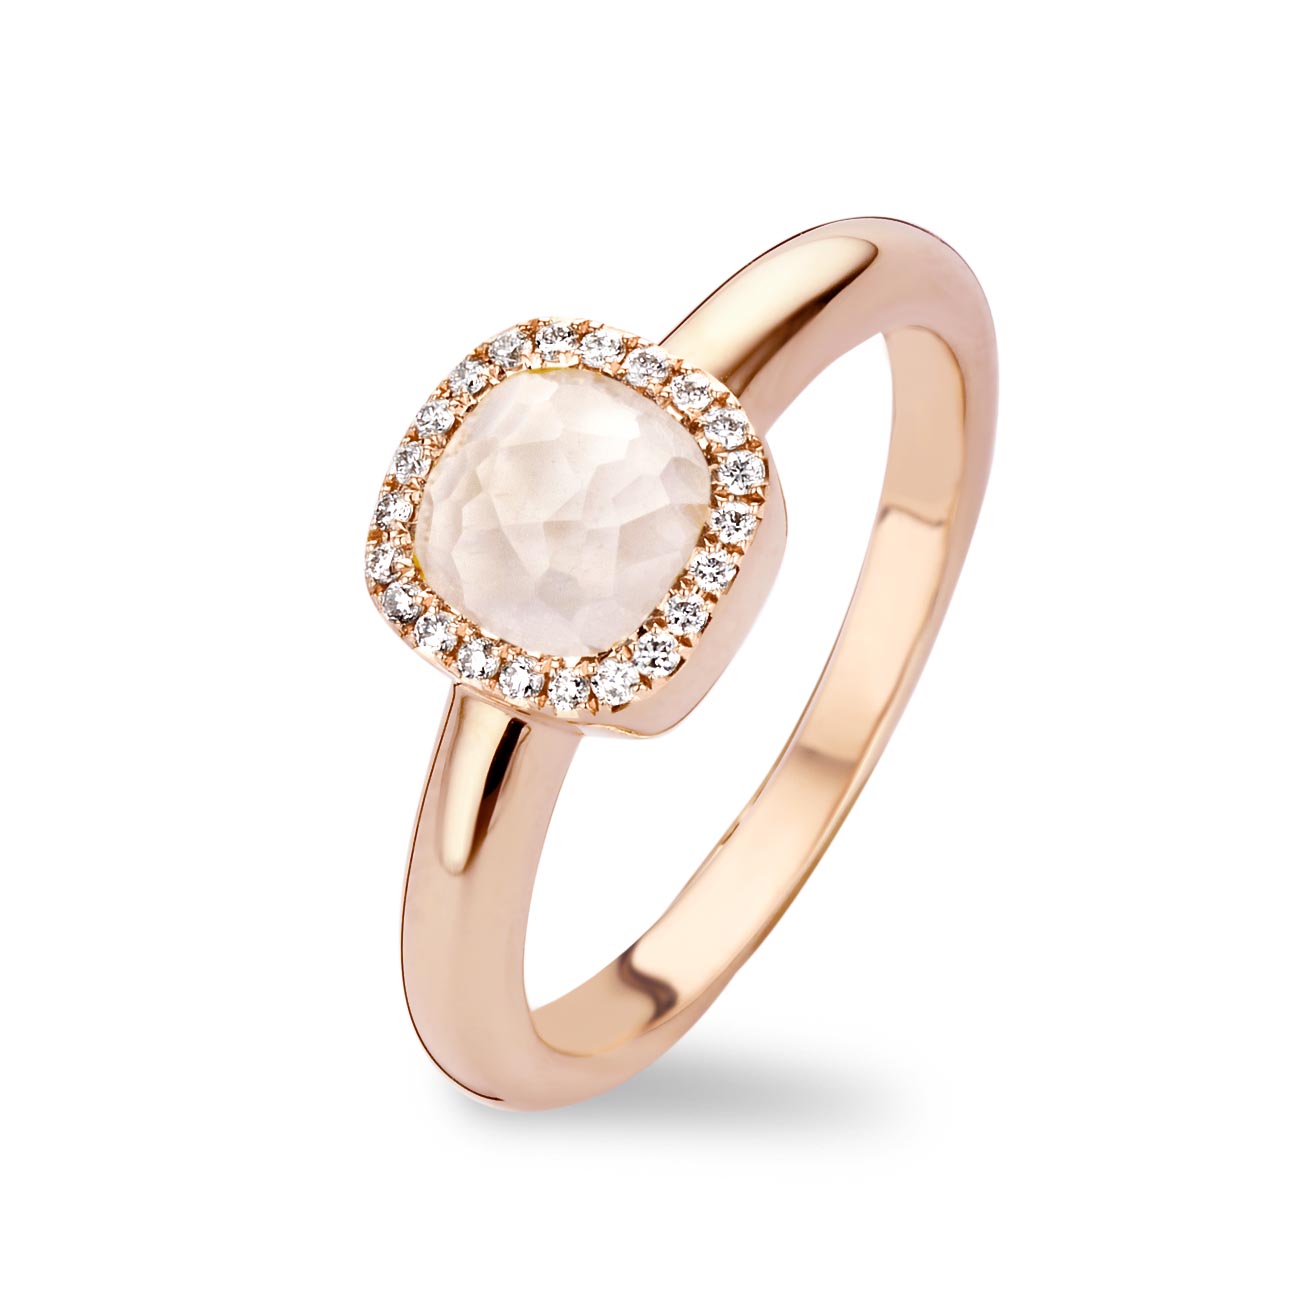 Tirisi jewelry milano sweeties 18 karaats roségouden ring met kwarts, parelmoer en diamant